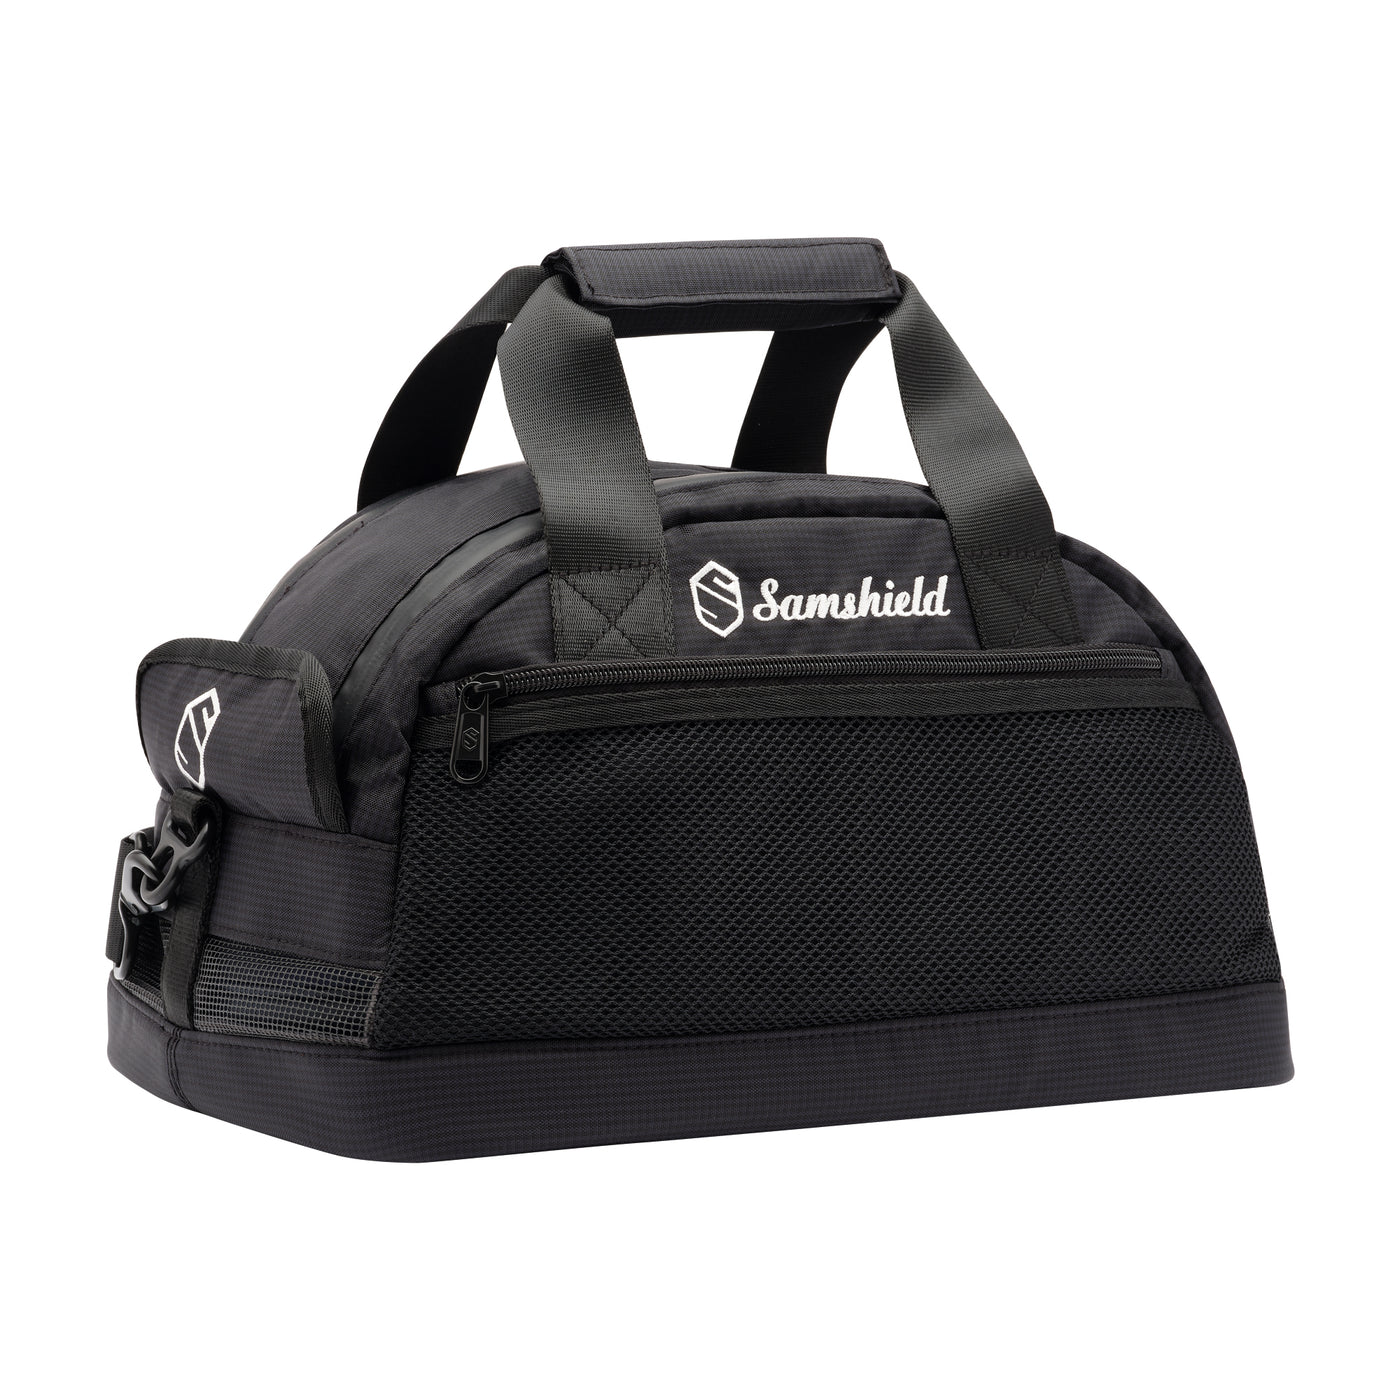 Samshield 2.0 Carry Bag